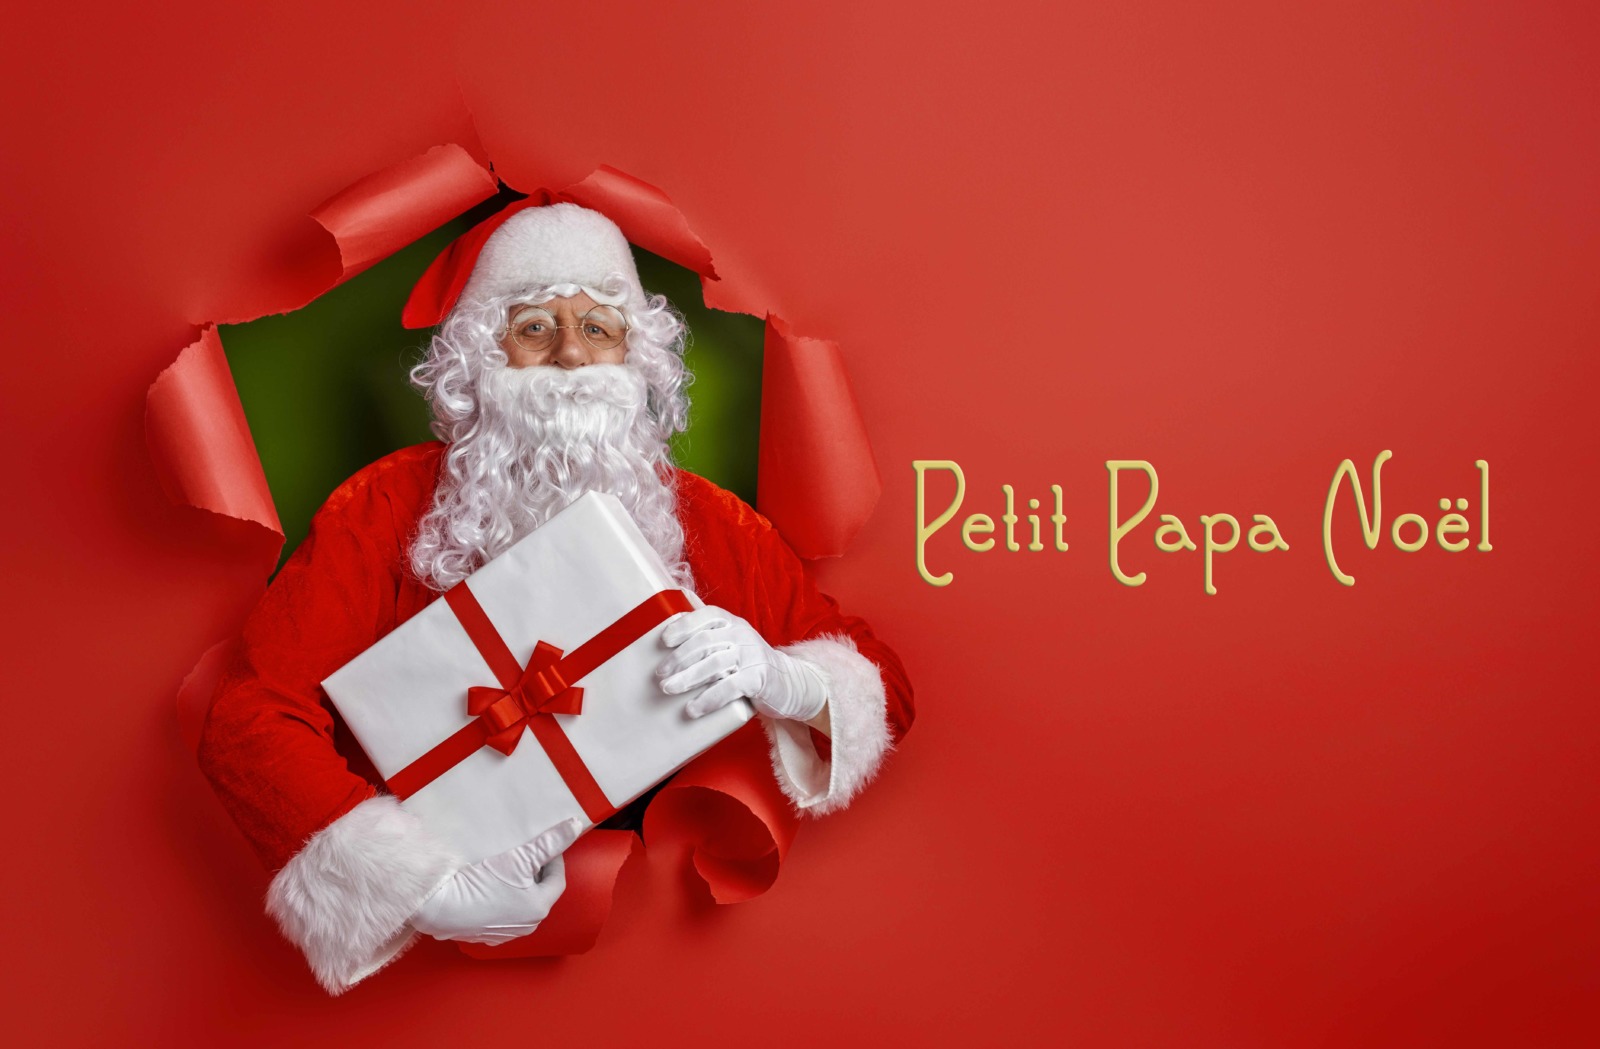 Petit Papa Noël. Photo by choreograph via Envato Elements